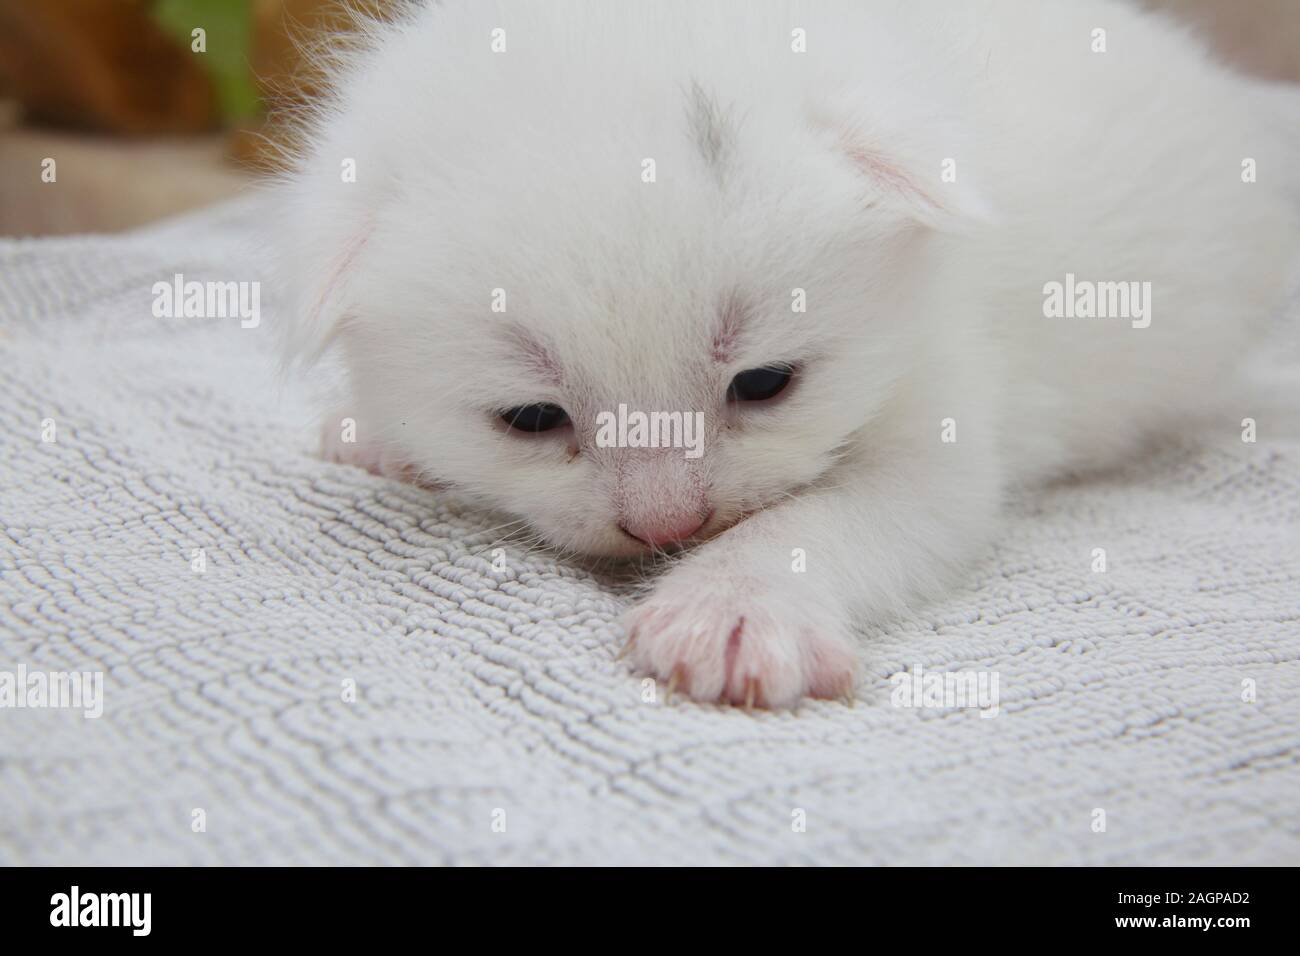 Two Week Old White Kitten with Grey Markings on head Part Turkish Angora  Stock Photo - Alamy